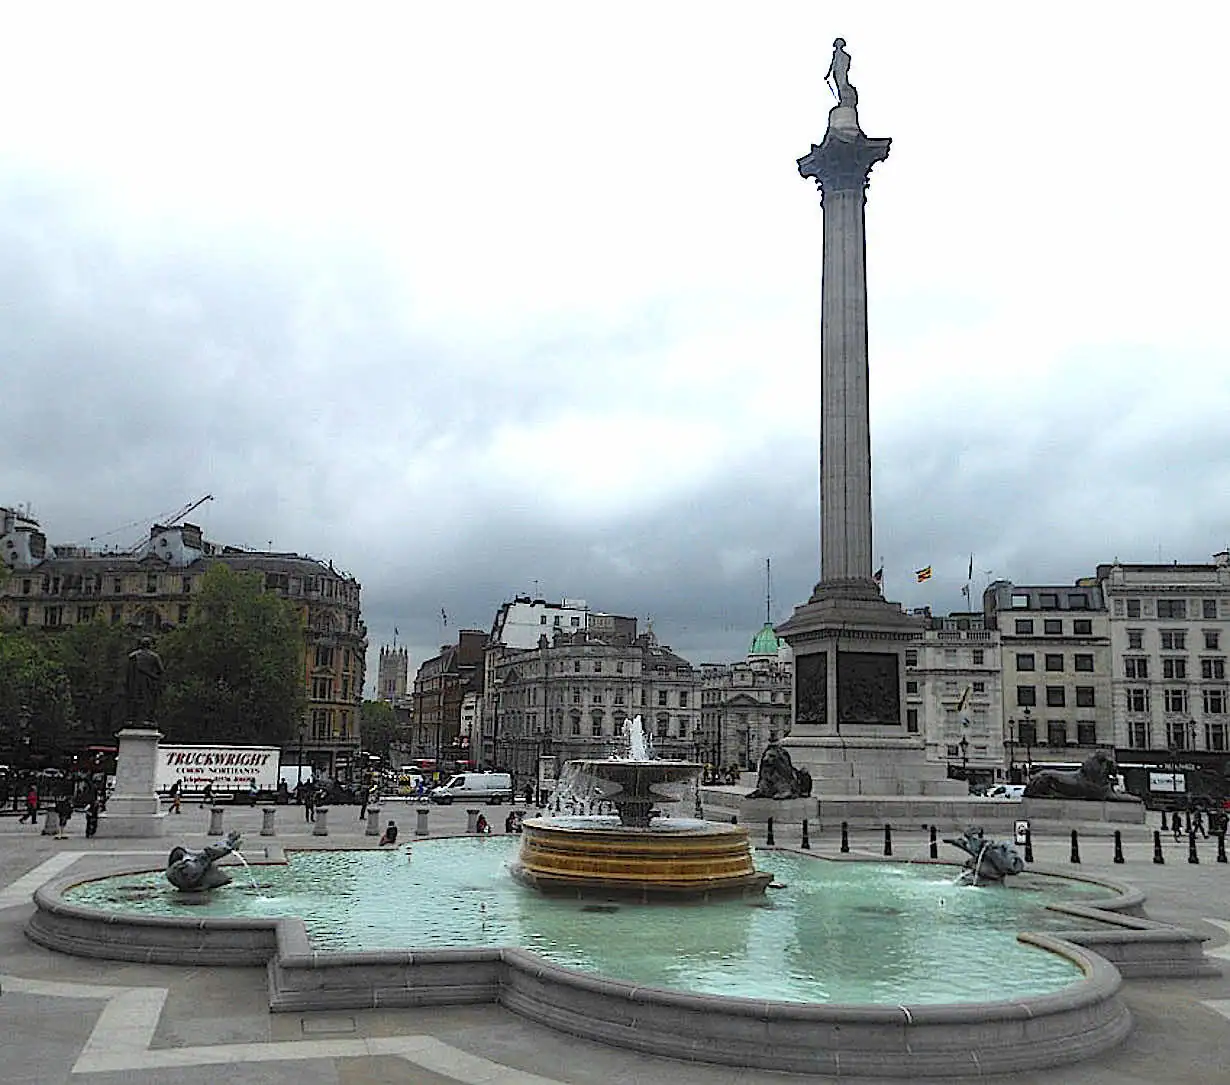 Nelson’s Column in Trafalgar Square